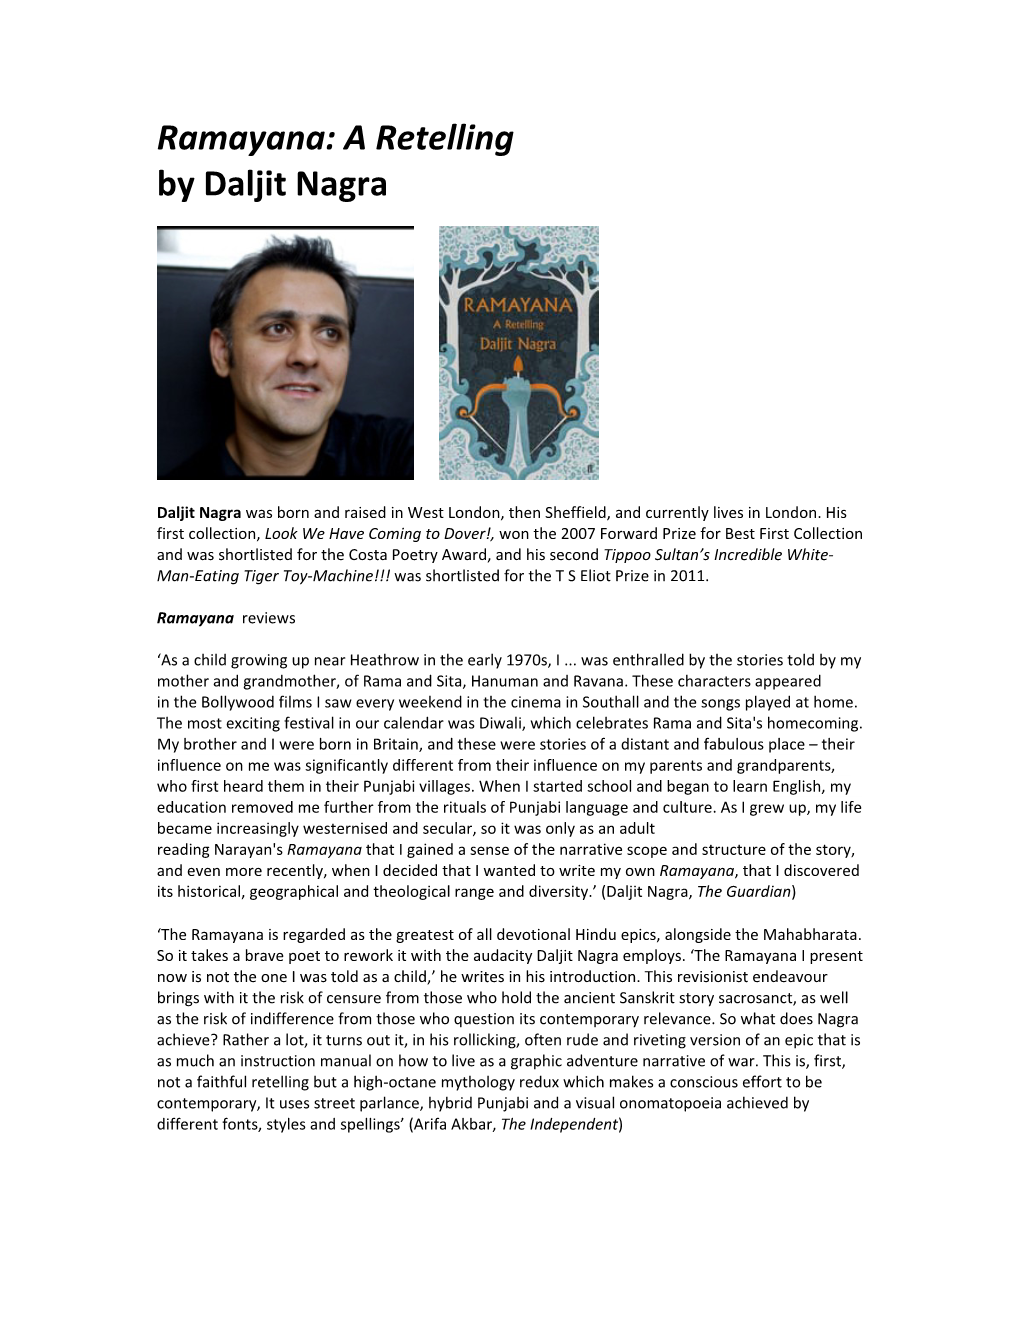 Notes on Ramayana: a Retelling by Daljit Nagra